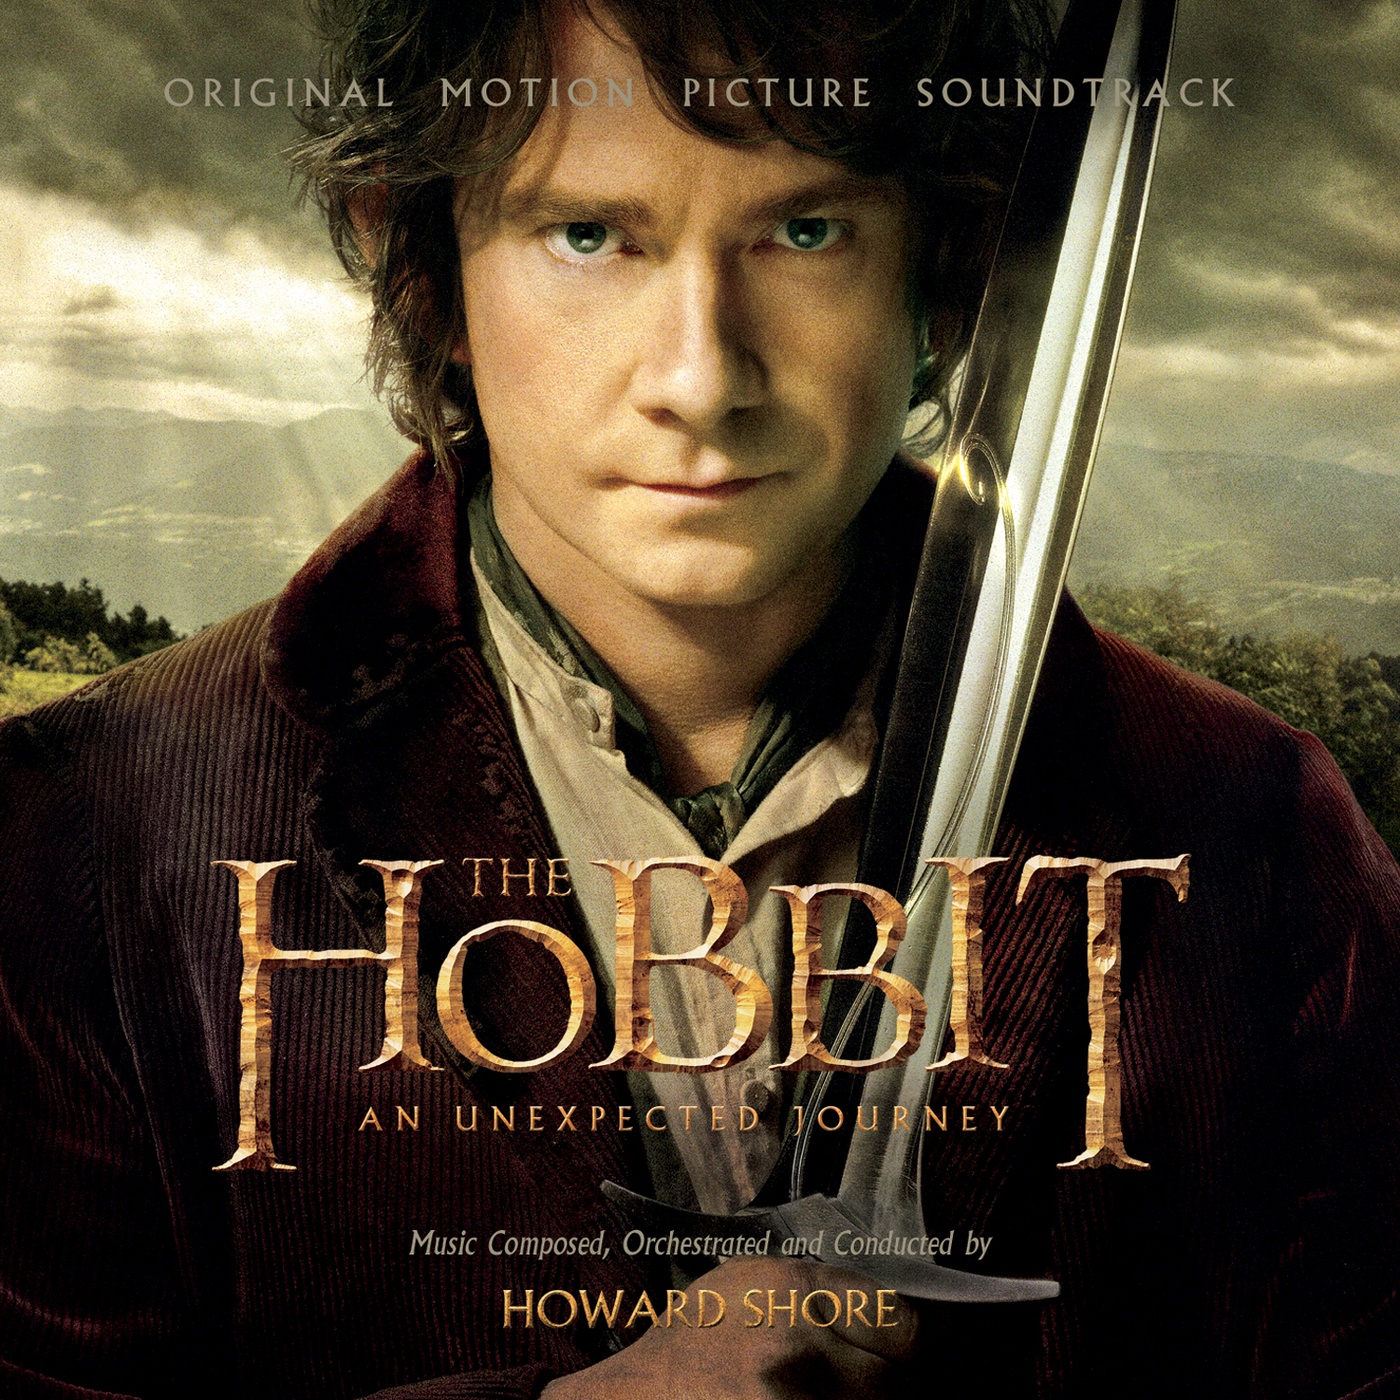 The Hobbit: An Unexpected Journey Original Motion Picture Soundtrack